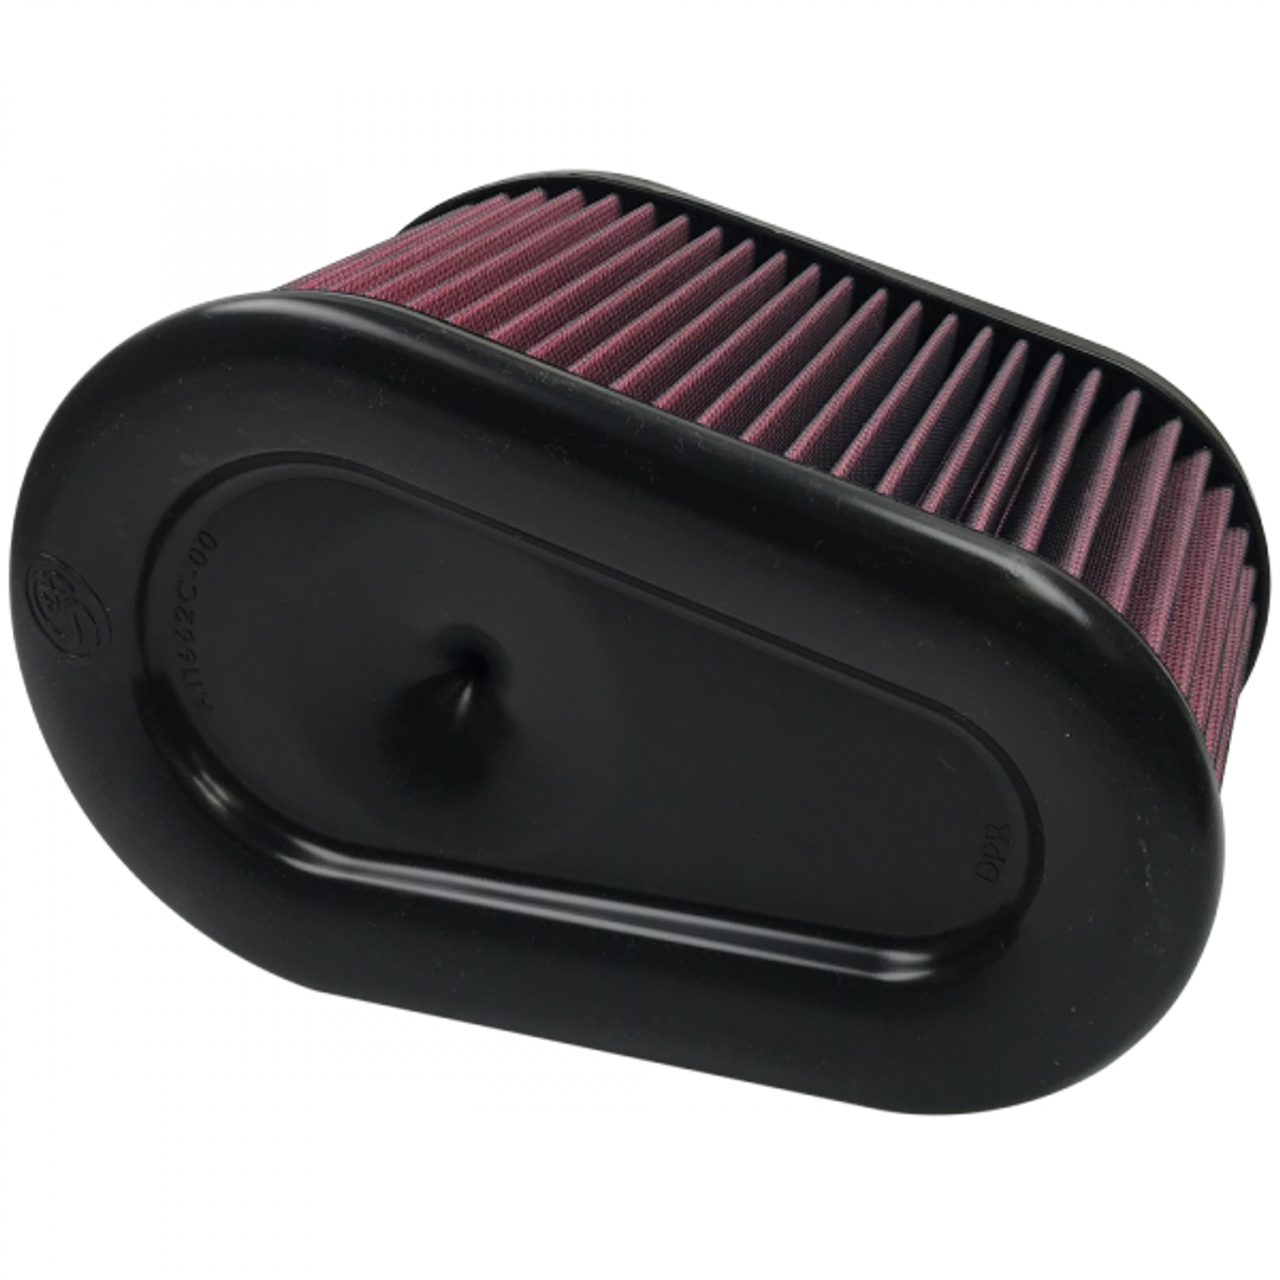 Air Filter For Intake Kits 75-5070